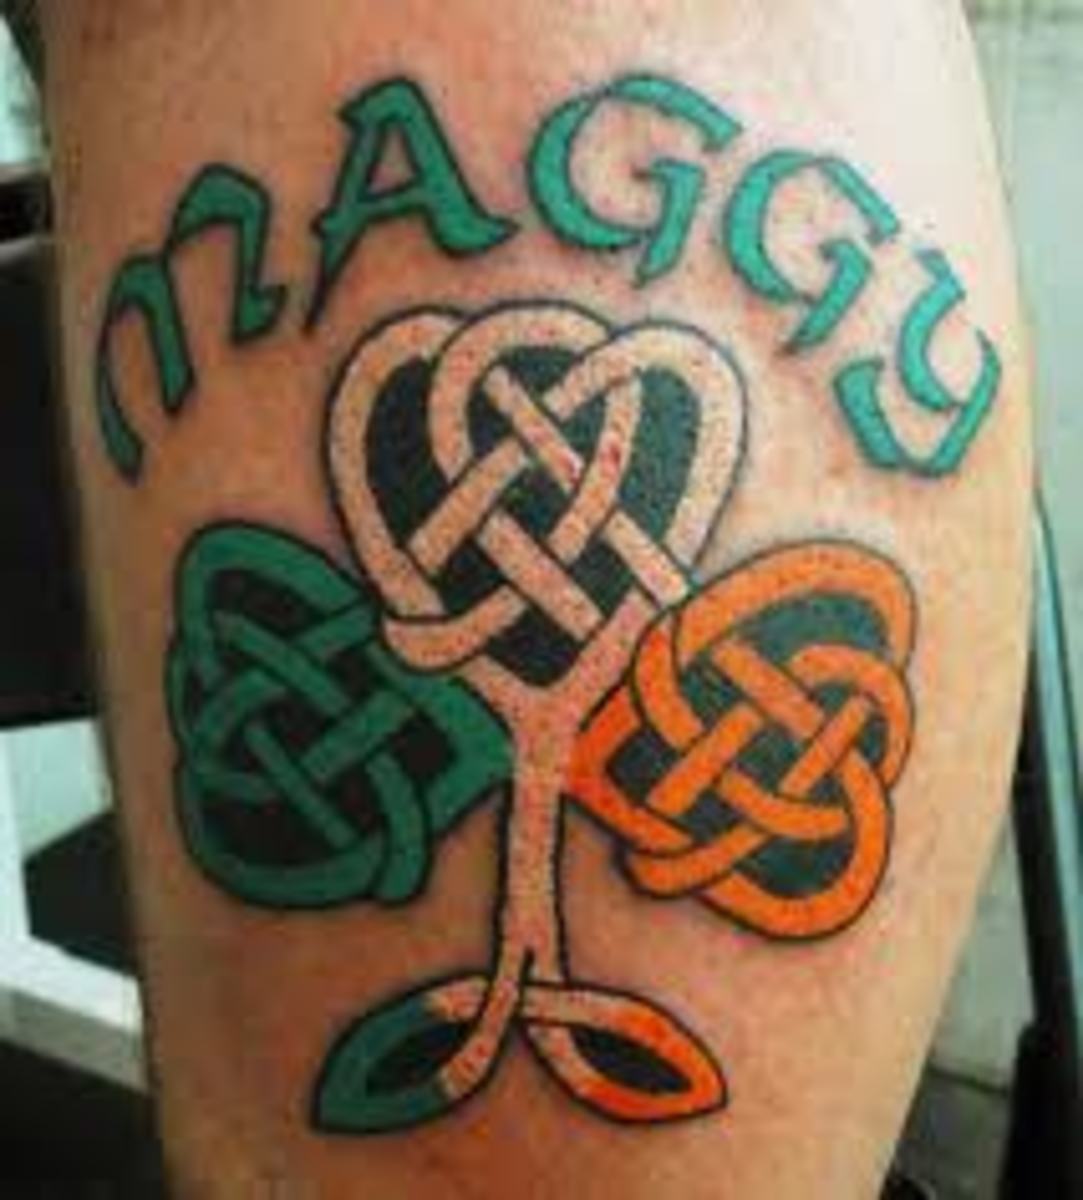 celtic-tattoo-designs-and-celtic-tattoo-meanings-popular-celtic-tattoos-and-meanings